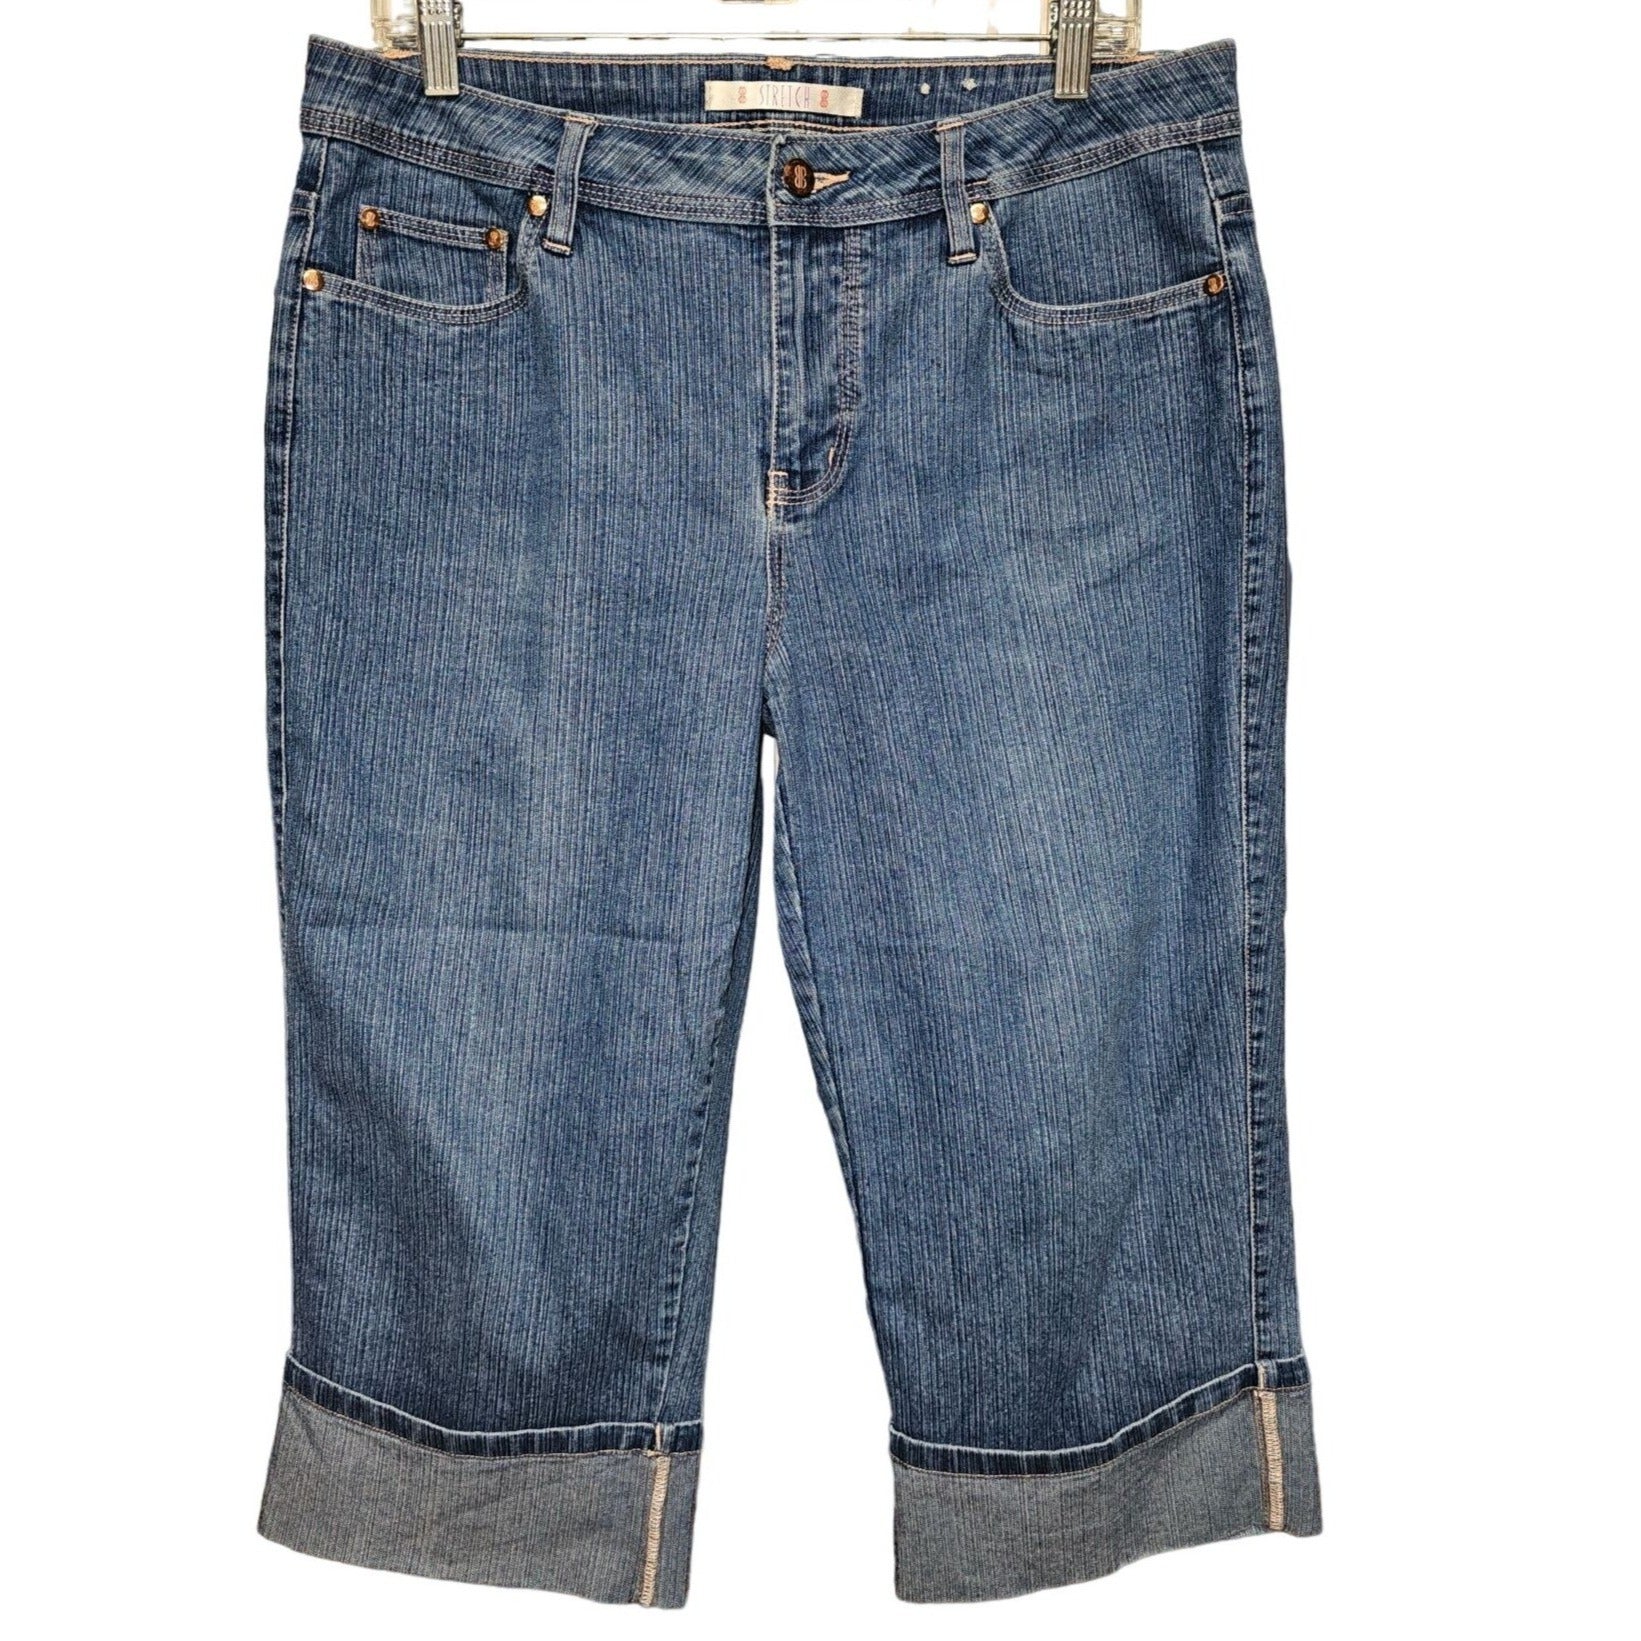 Bill Blass Boyfriend Style, Stretch, Cropped or Capris Jeans, Size 10 Petite